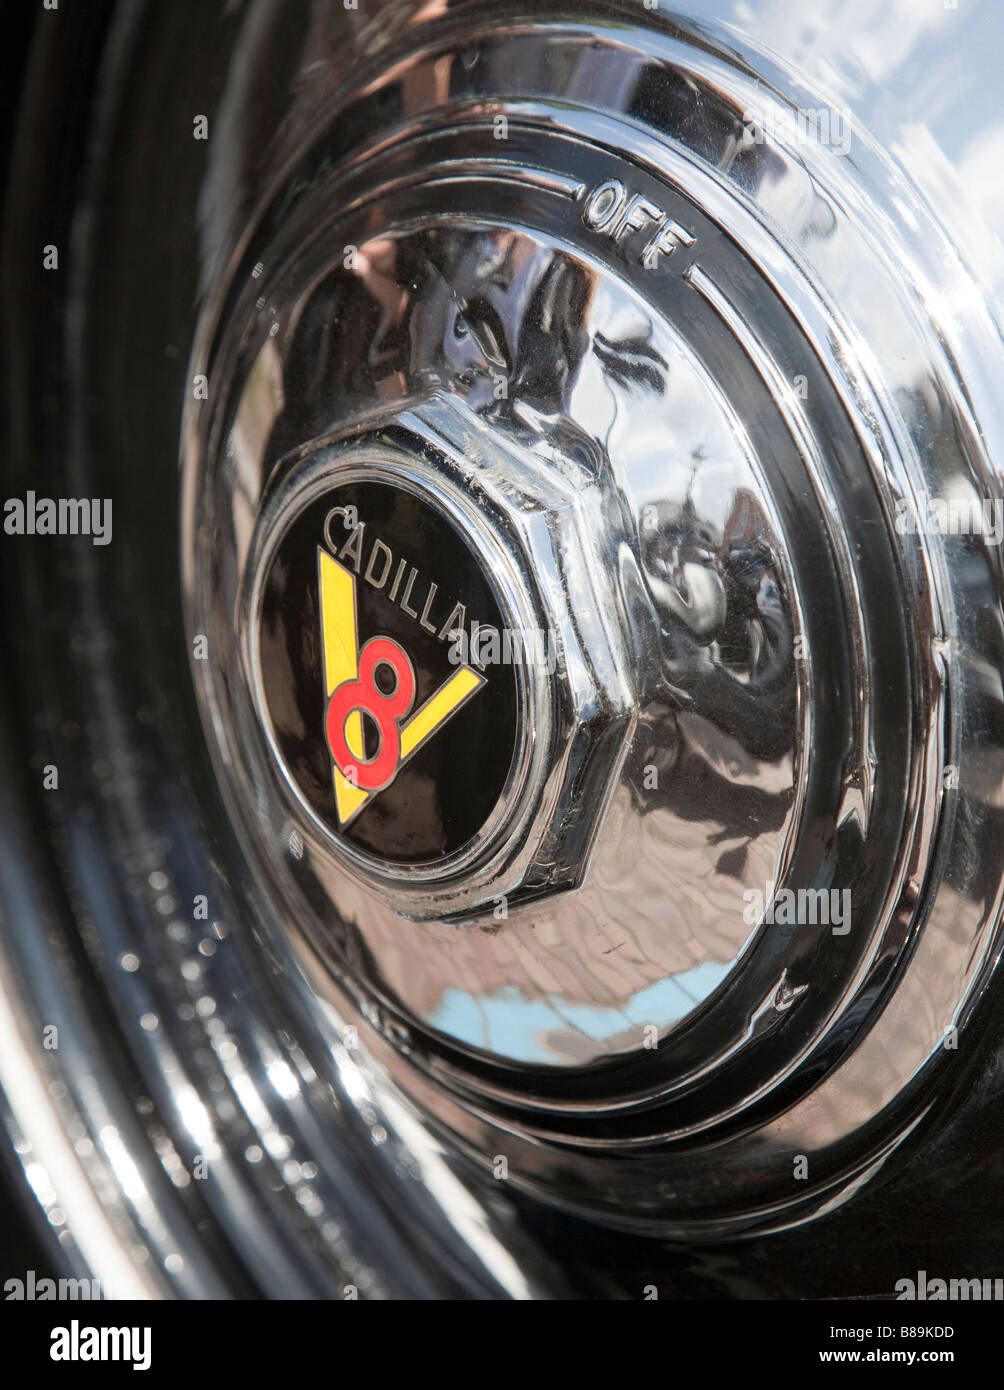 Cadillac V8 classic car badge on wheel hug Stock Photo